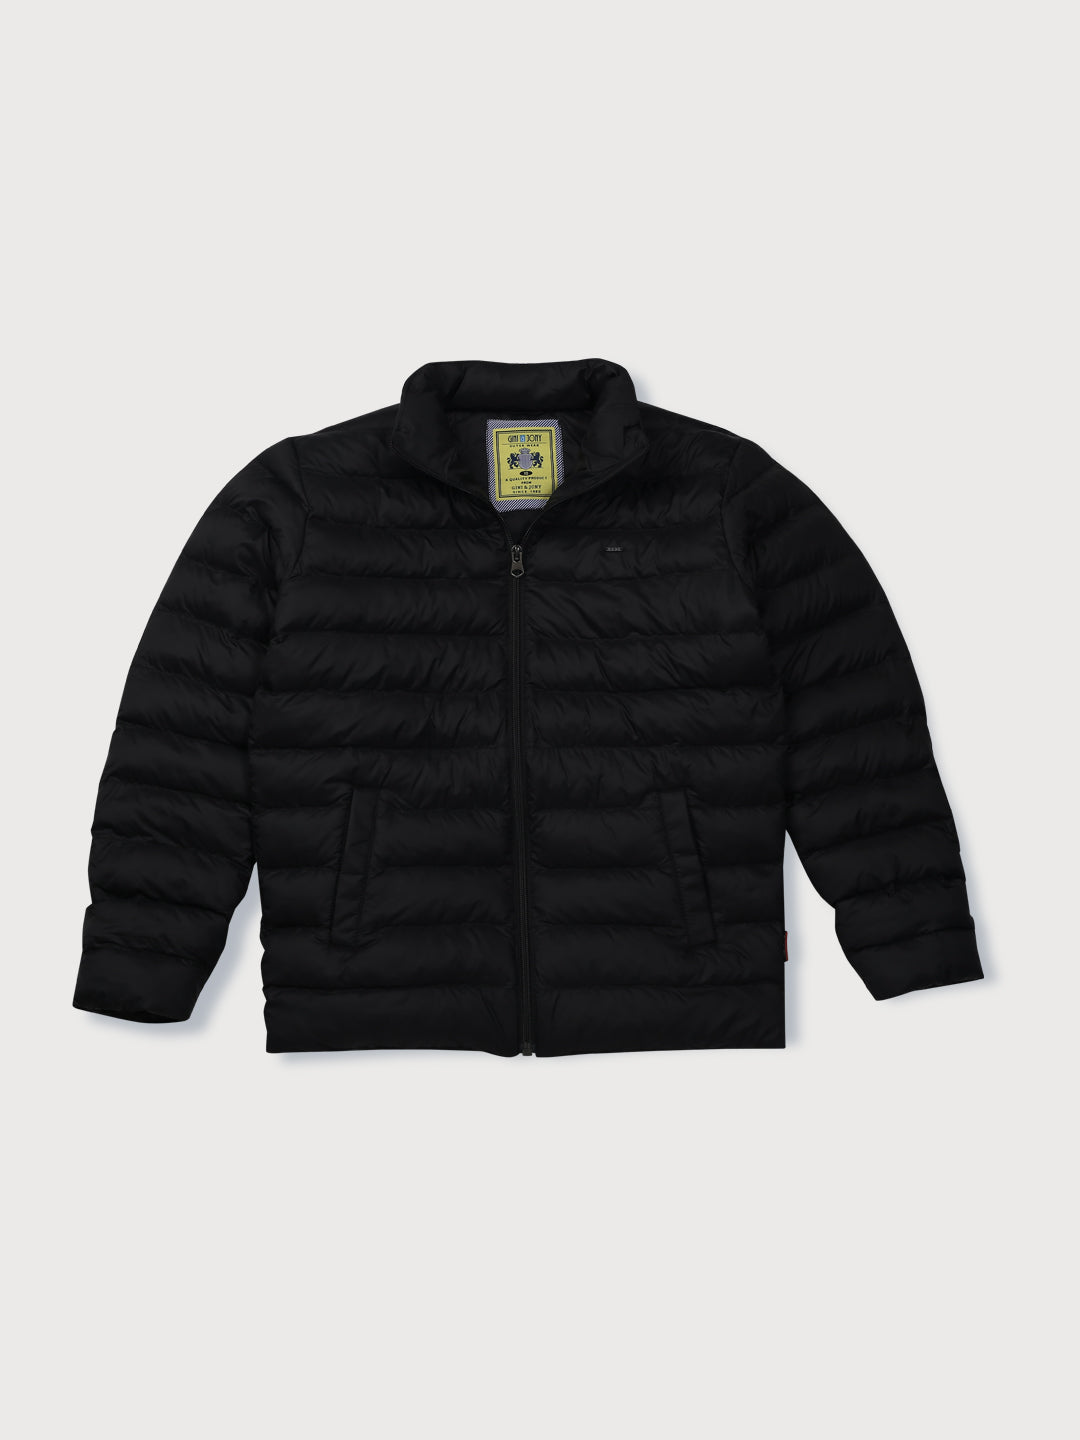 Boys Black Taffeta Solid Full Sleeves Heavy Winter Jacket